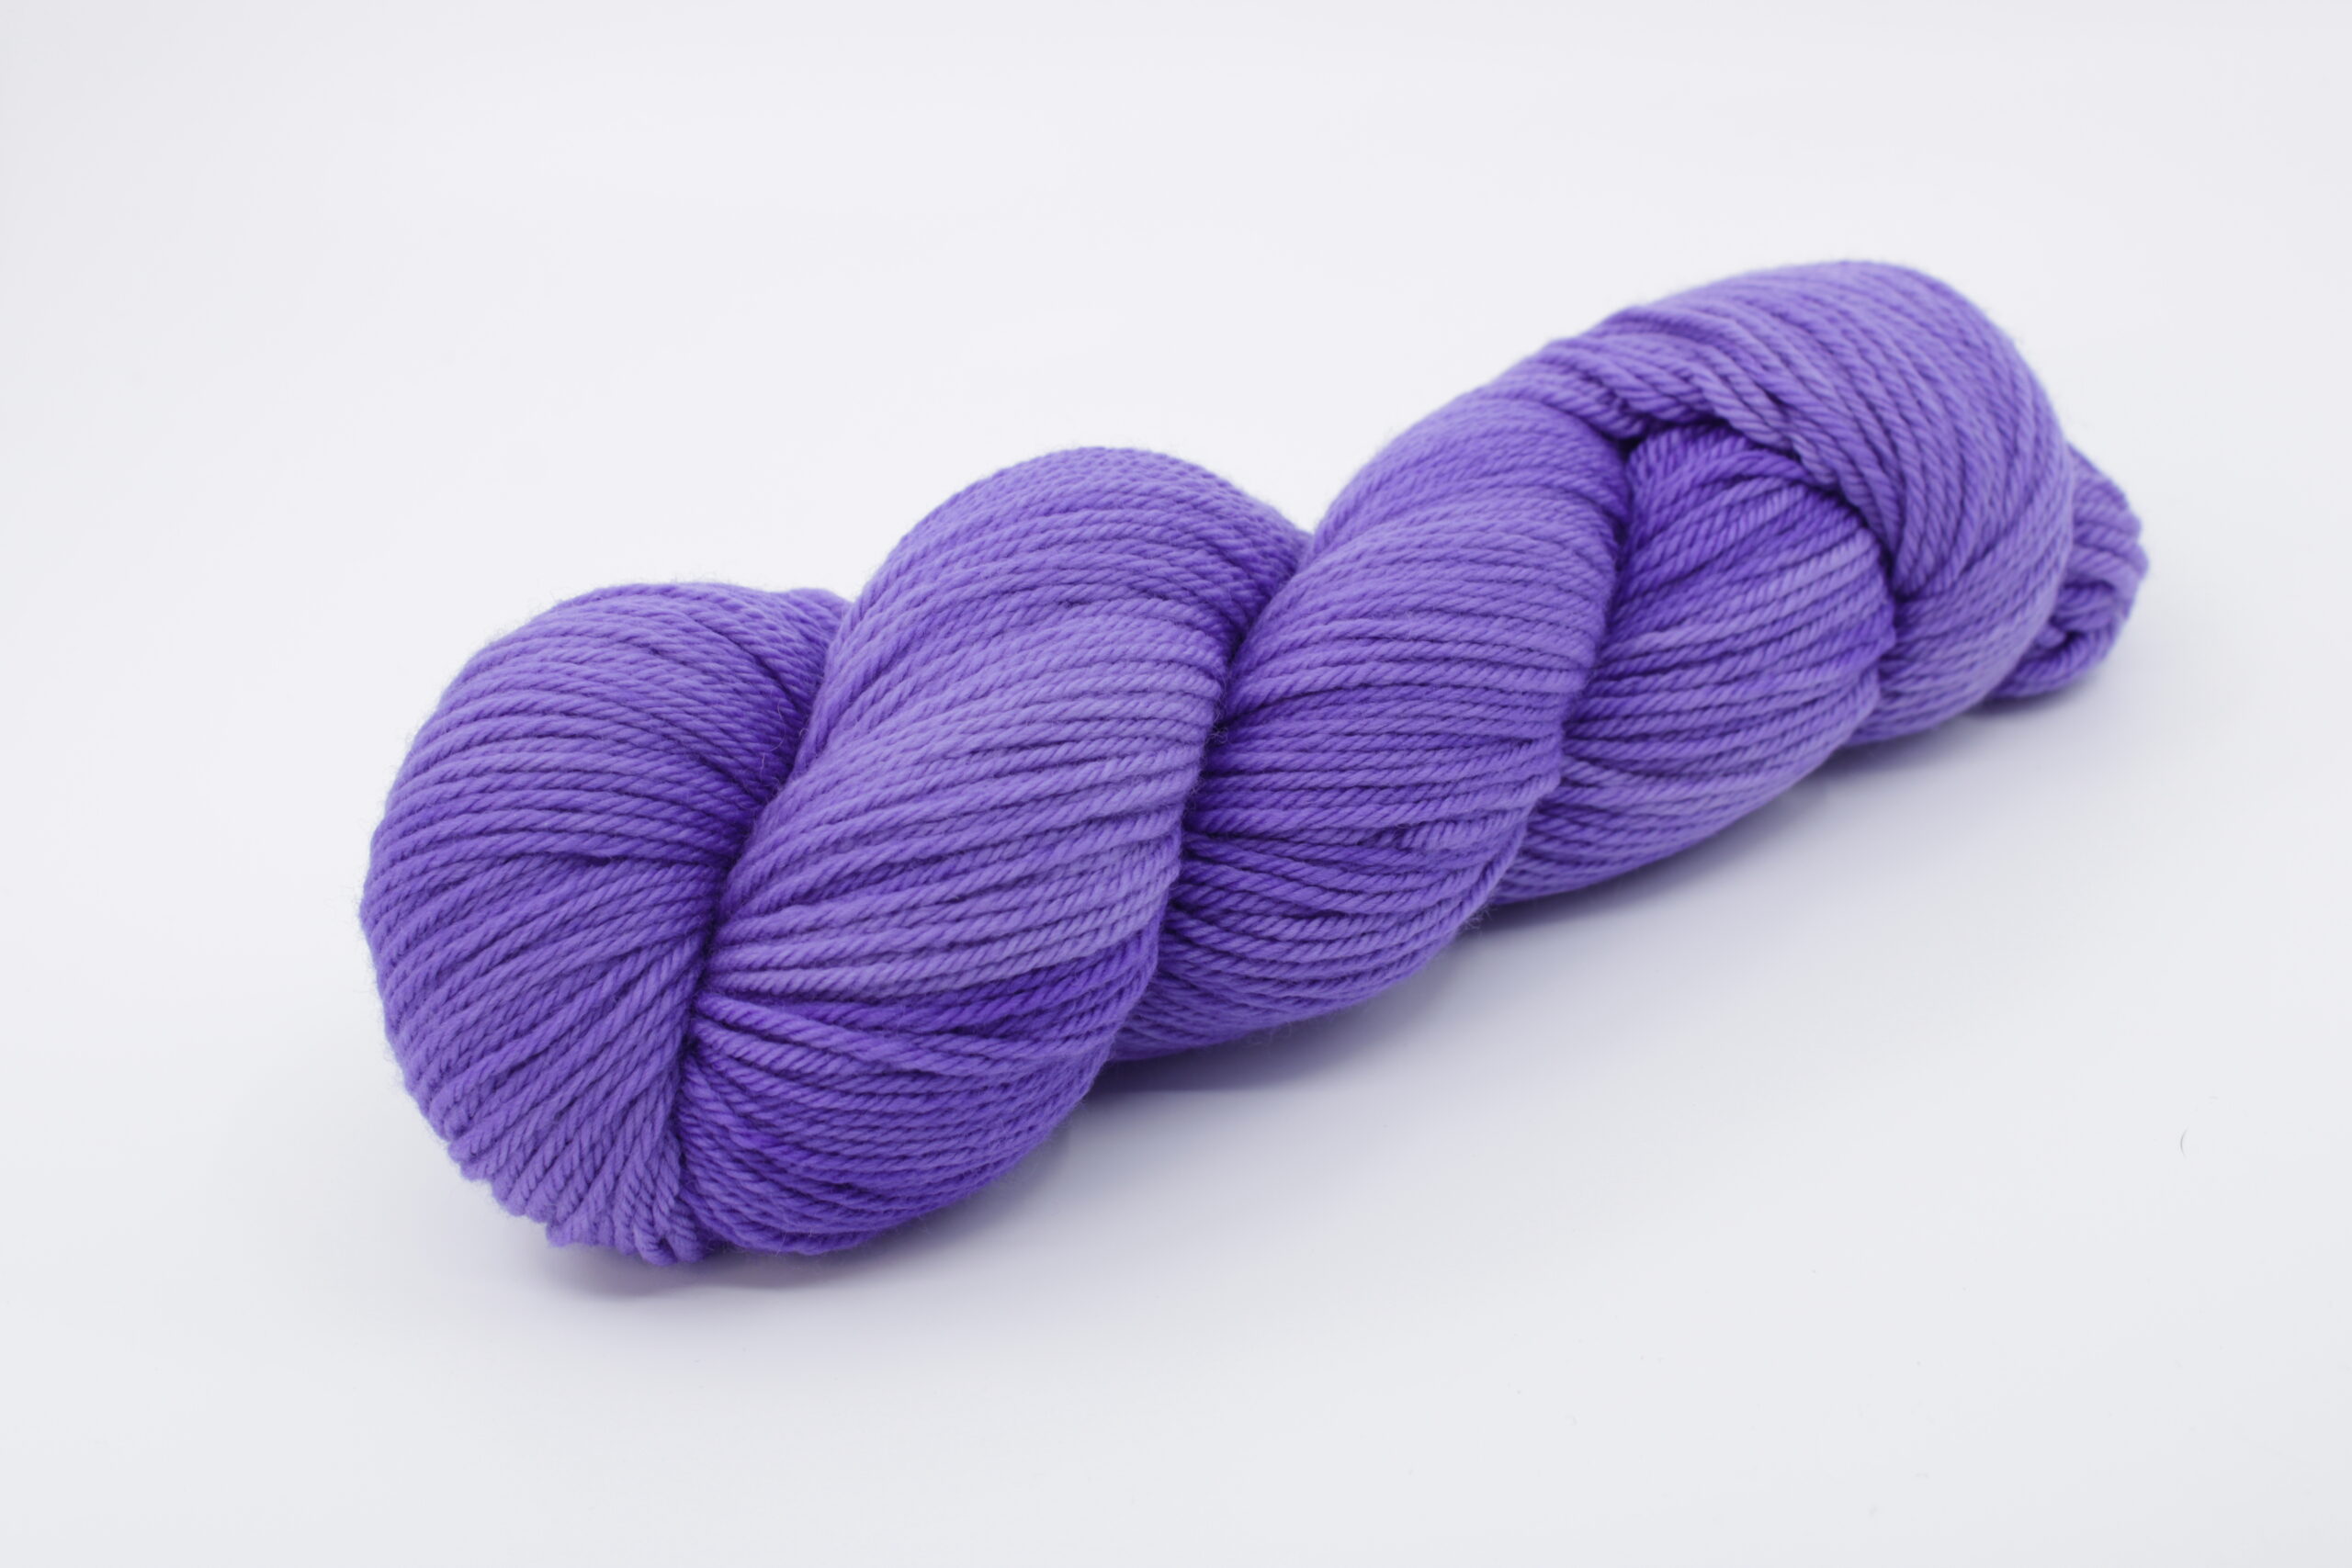 Fibrani wool, base: Flocon DK. 100% untreated merino wool, purple color. Color: Louisa.